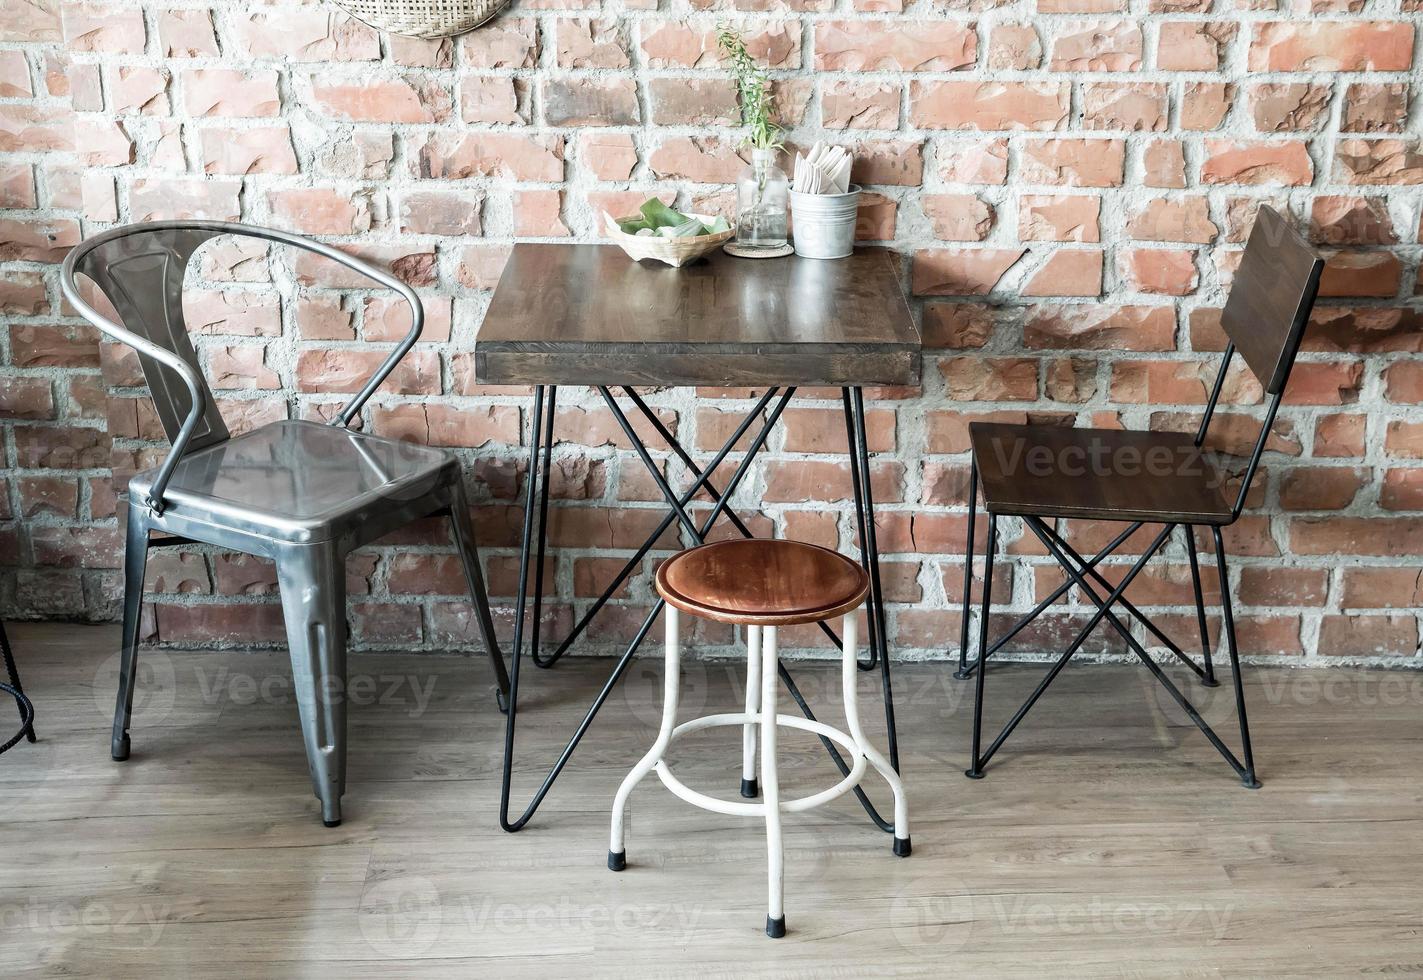 lege houten stoel in restaurant - vintage effectfilter foto